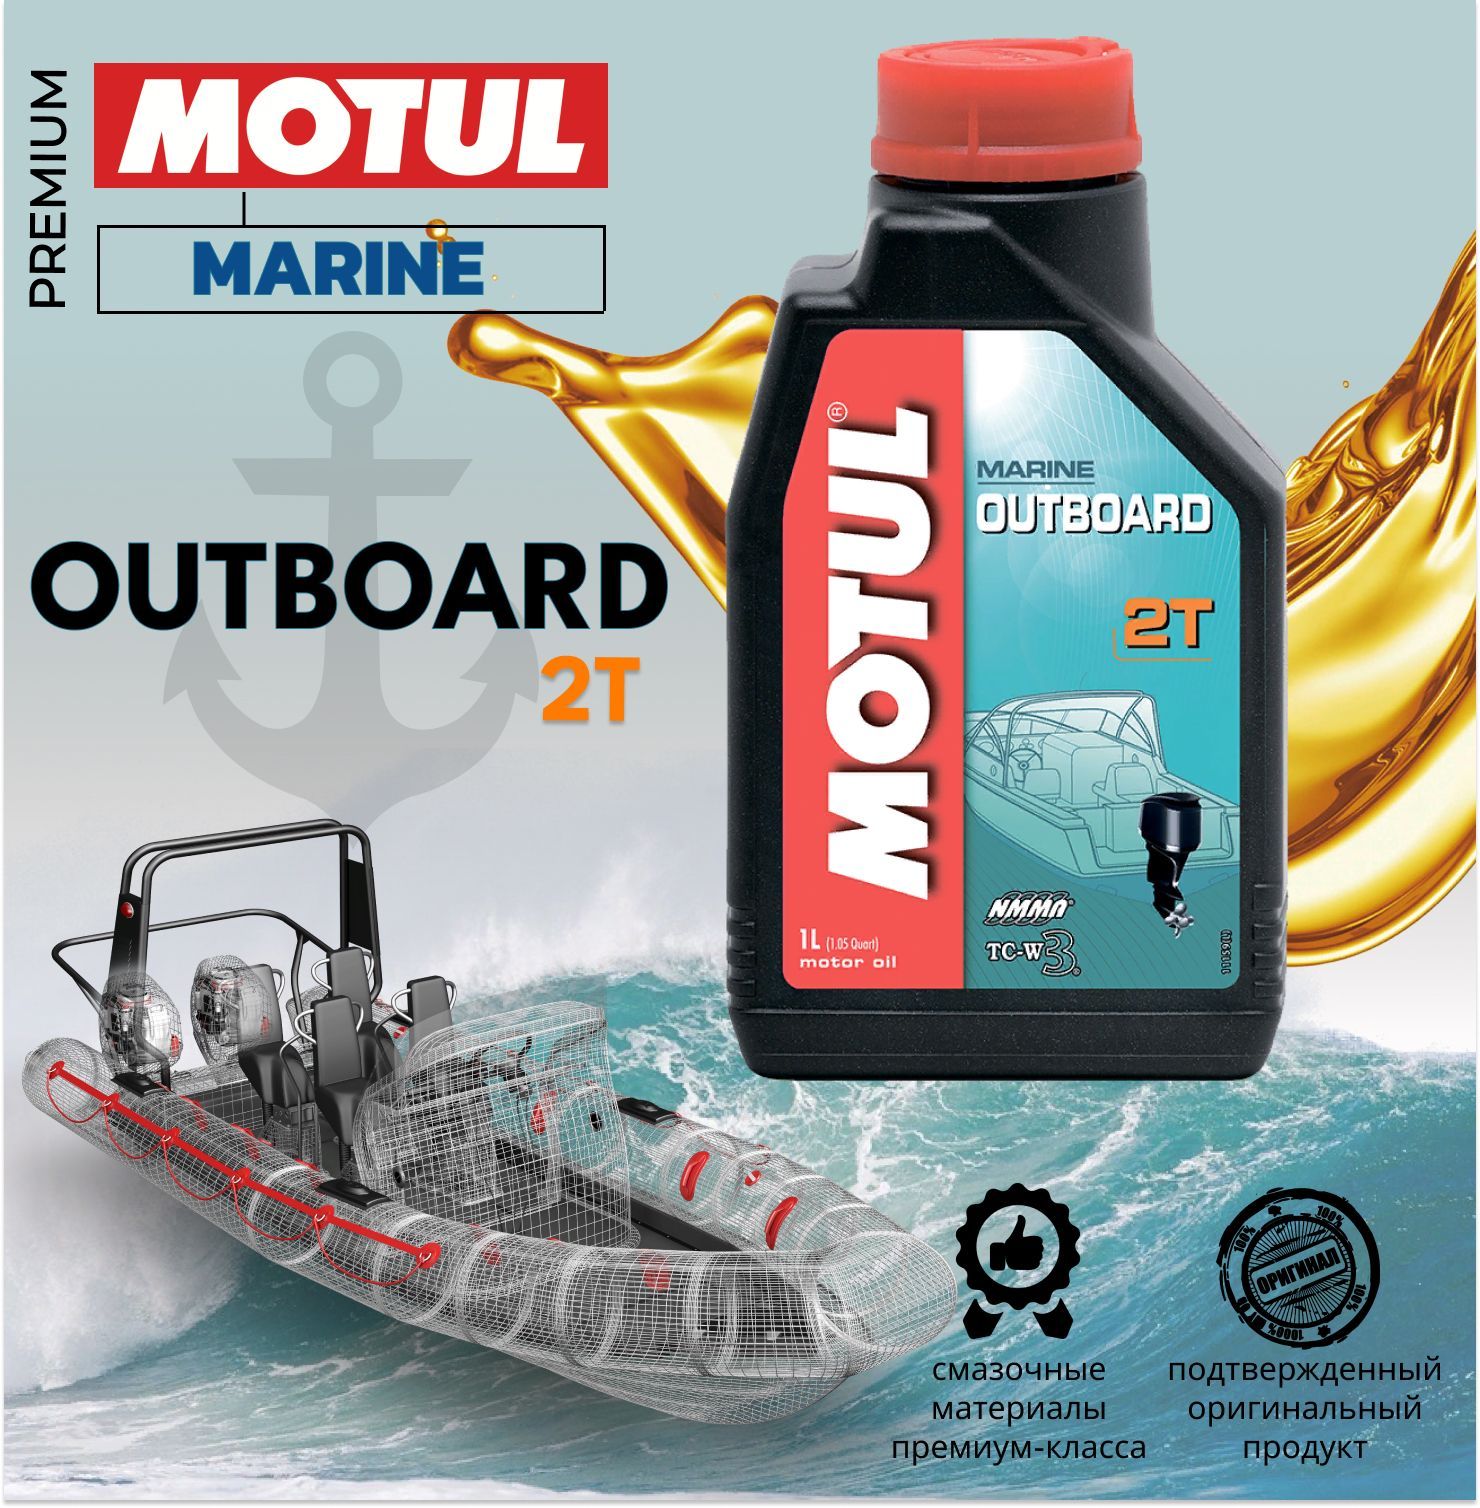 Motul outboard 2t (минеральное, масло для 2т ПЛМ) 1л. Motex s outboard Texaco. Outboard 2t отзывы. Motul outboard 2t 1л.